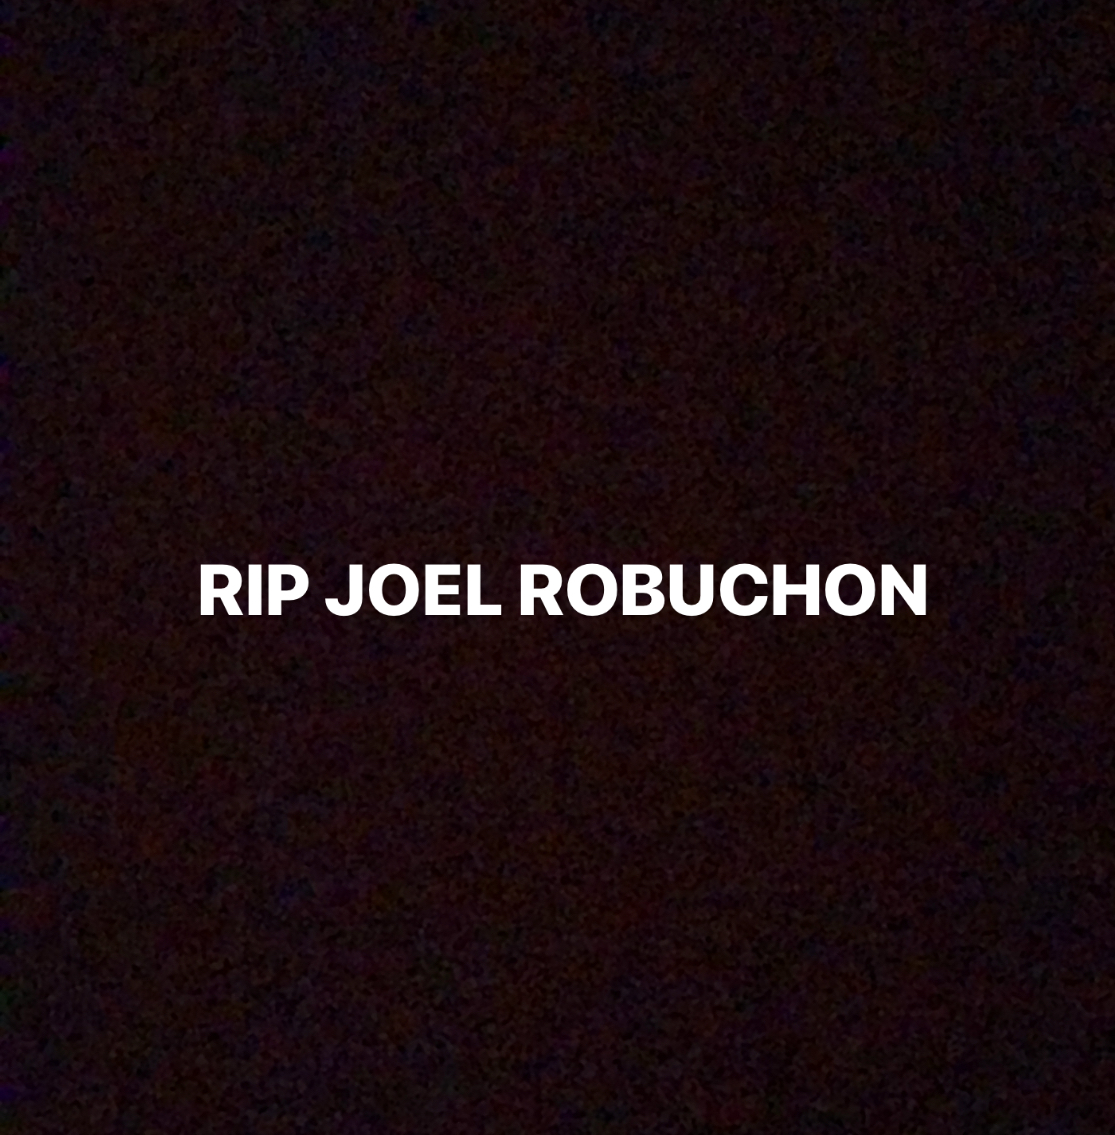 DE LEKKERSTE PUREE OOIT, VAN JOEL ROBUCHON (RIP)